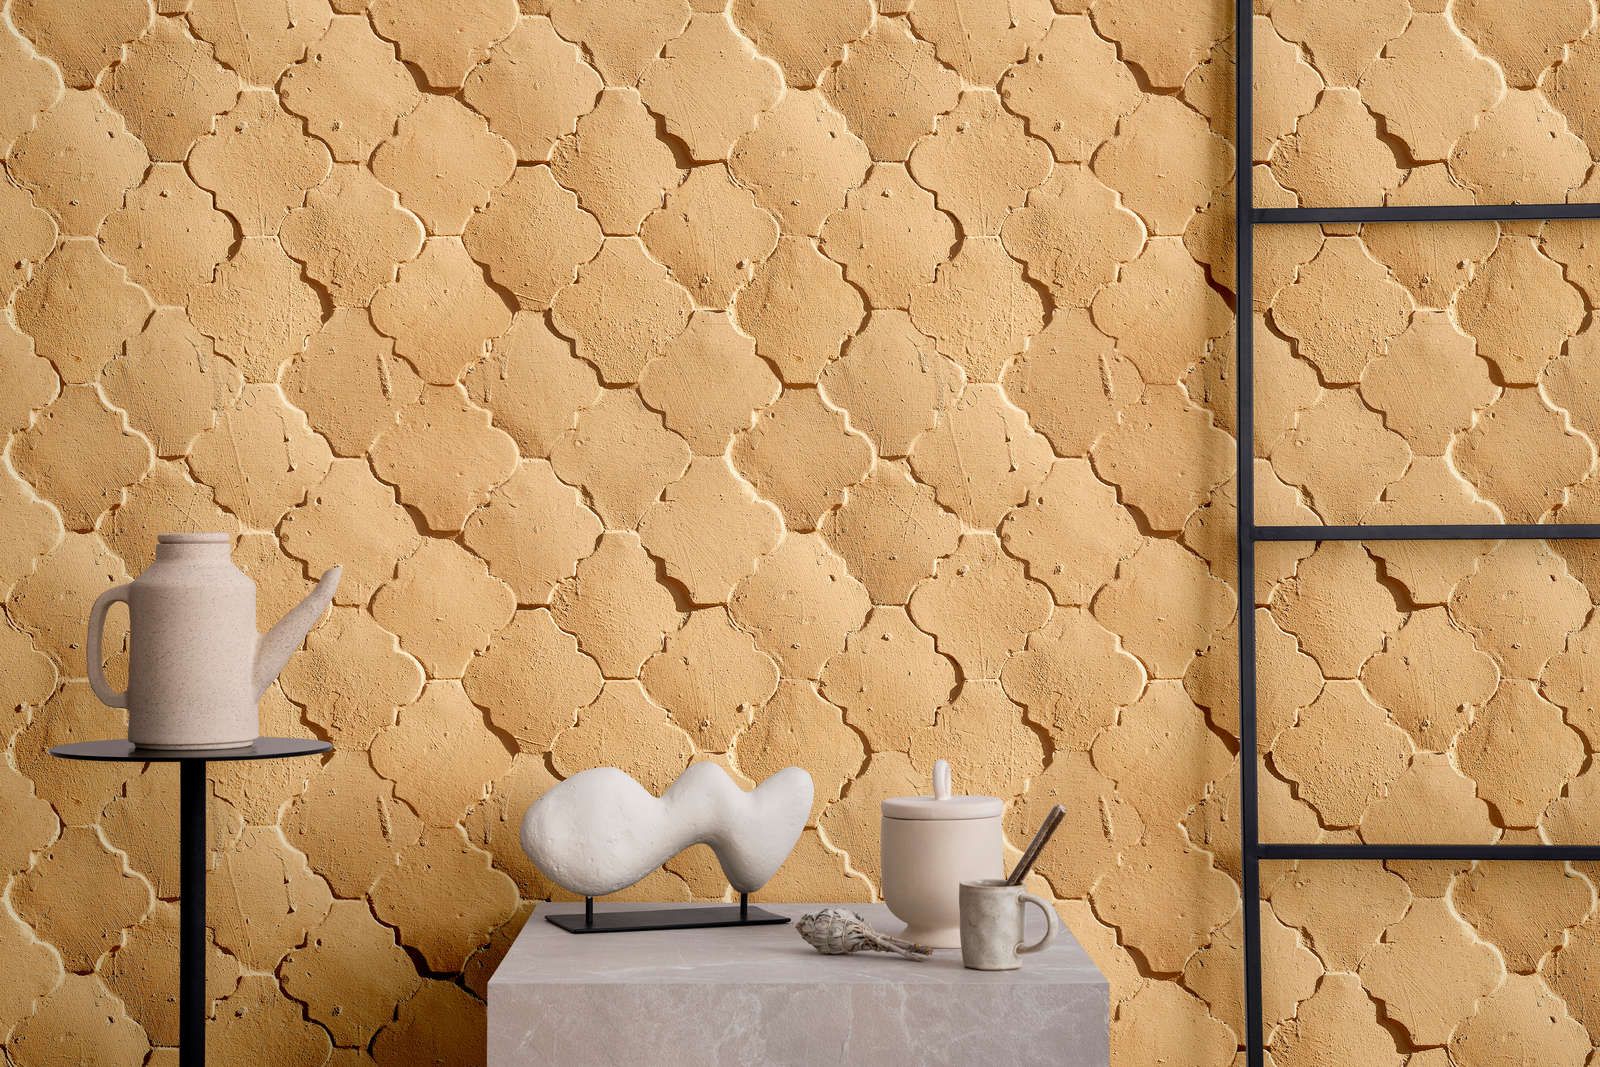             Digital behang »siena« - Mediterraan tegelpatroon in zandkleuren - Gladde, licht parelmoerglanzende vliesstof
        